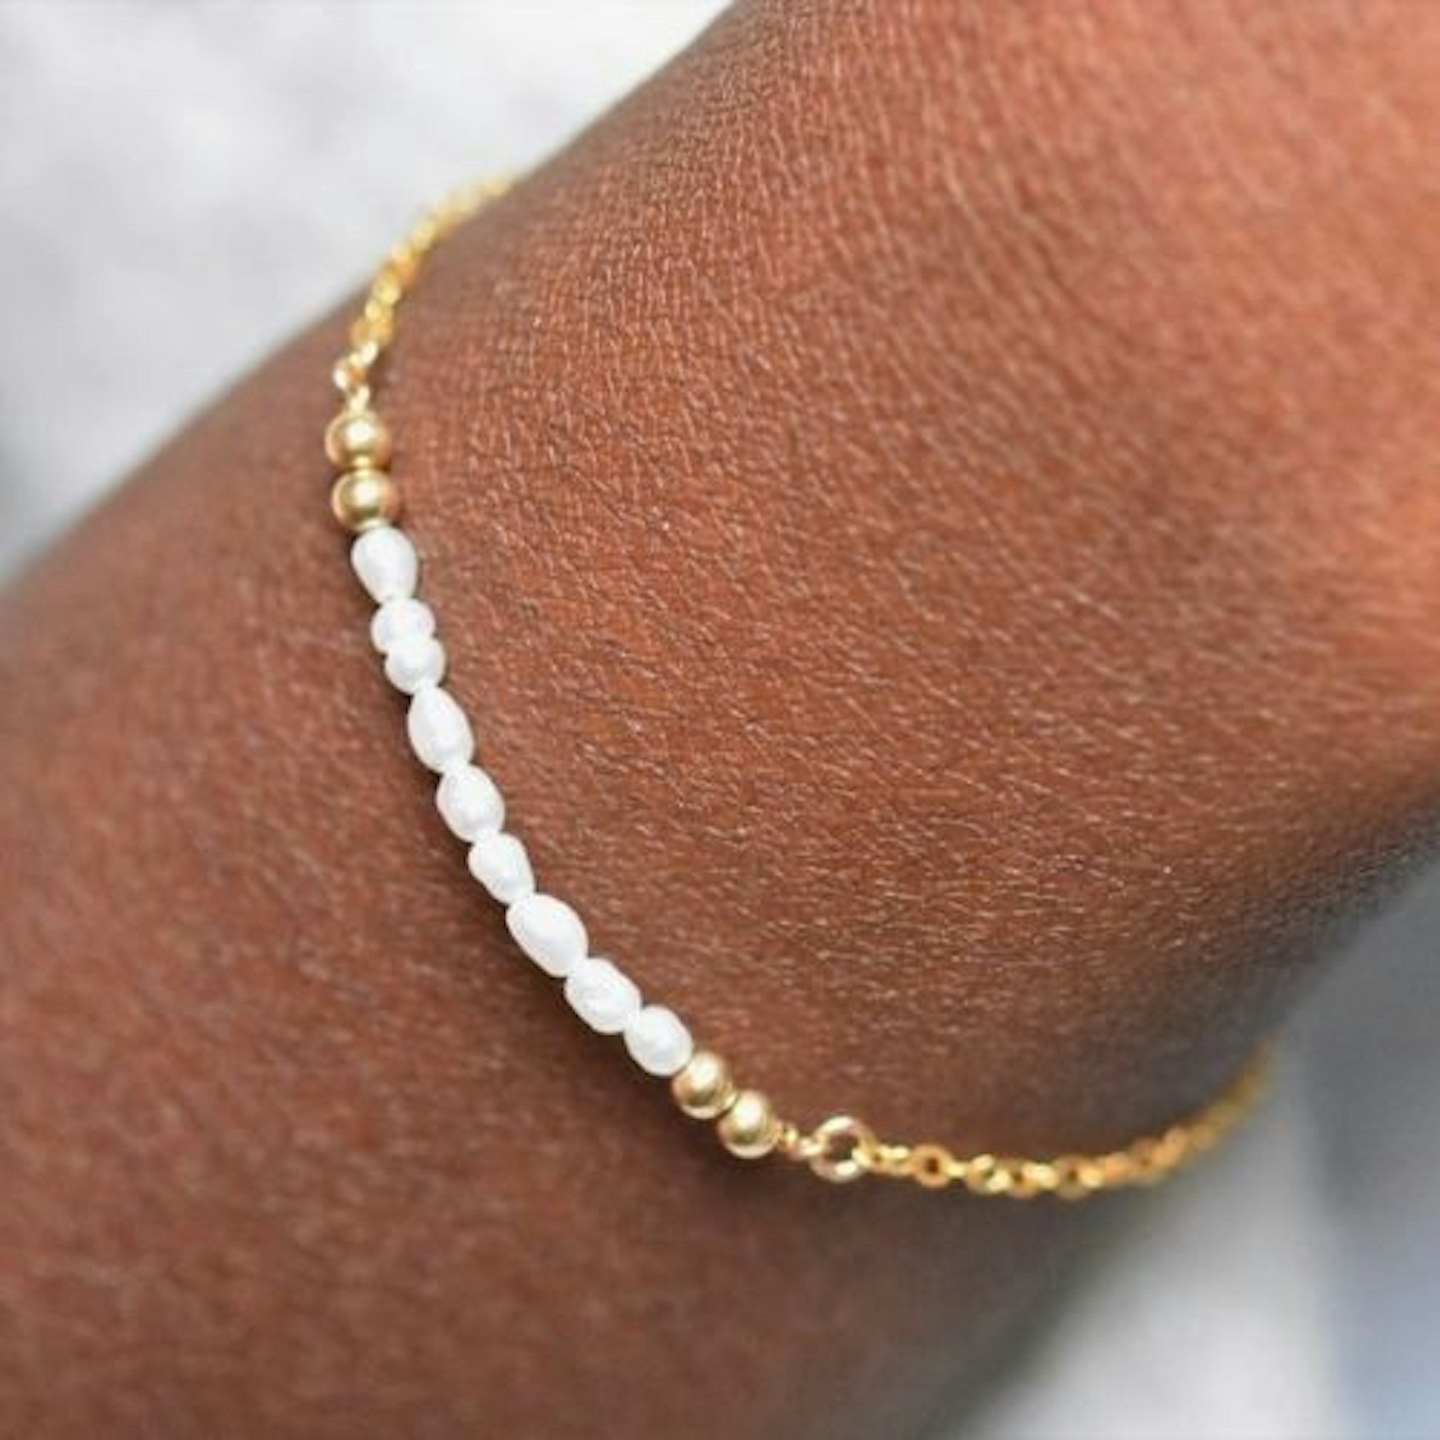 Pearline Bracelet